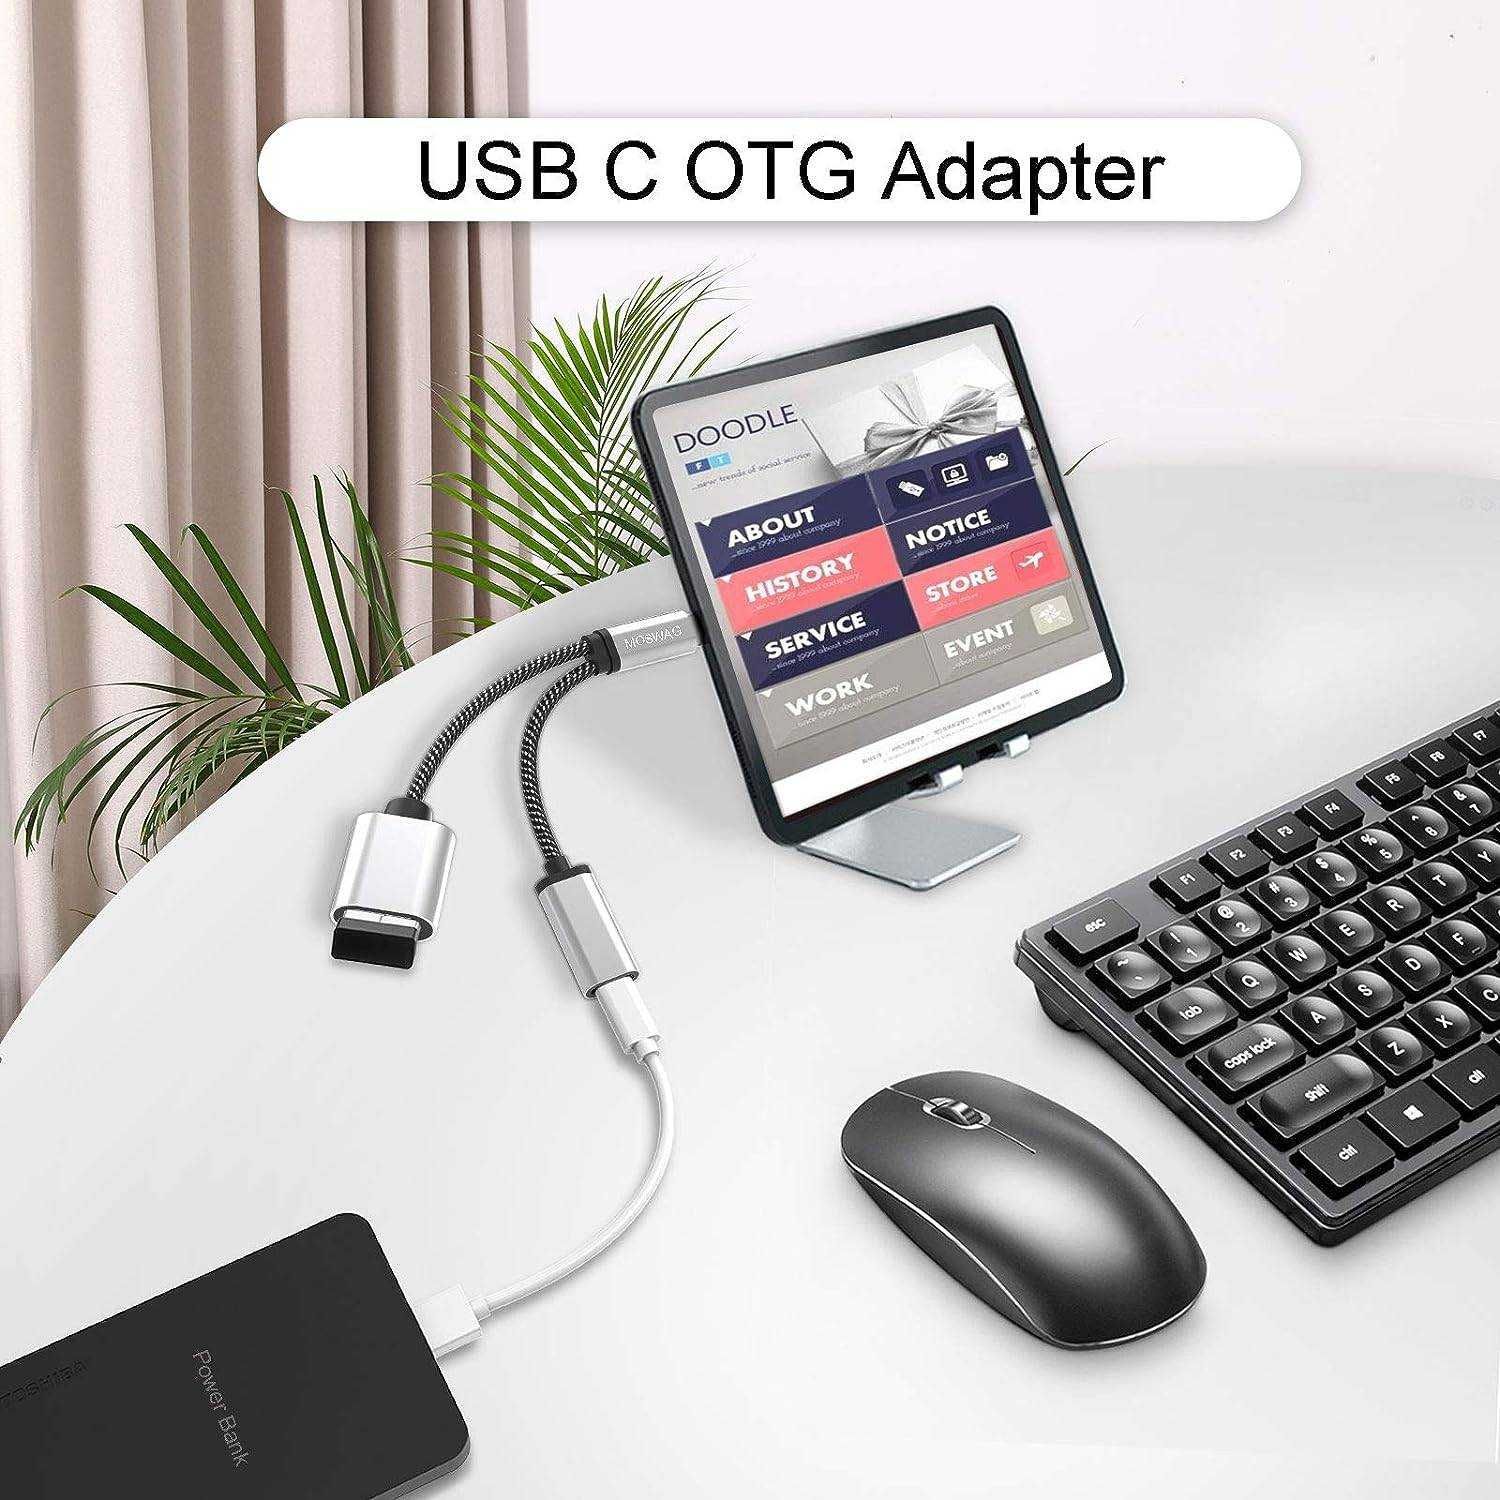 Адаптер MOSWAG USB C OTG Adapter (USB C Female и USB A Female)